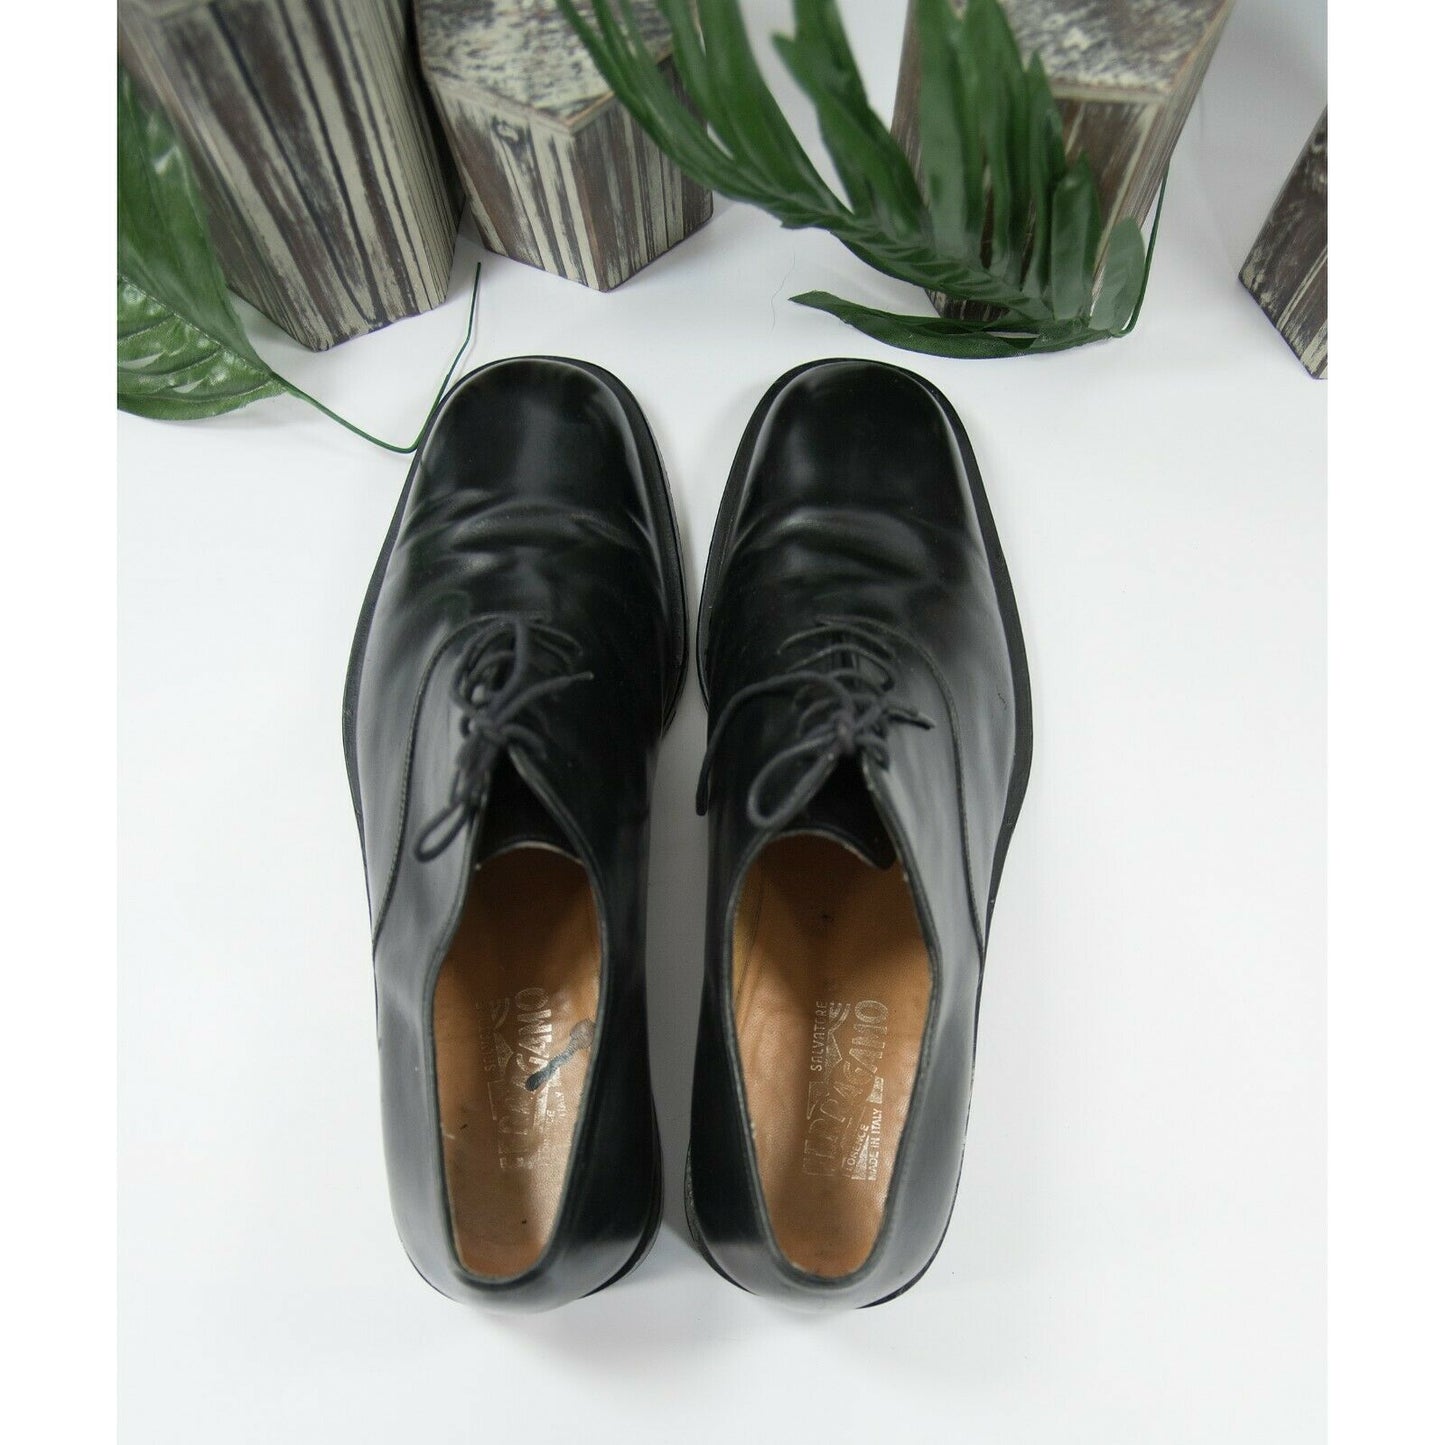 Salvatore Ferragamo Black Leather Lace Up Oxford Dress Shoes Size 13EE